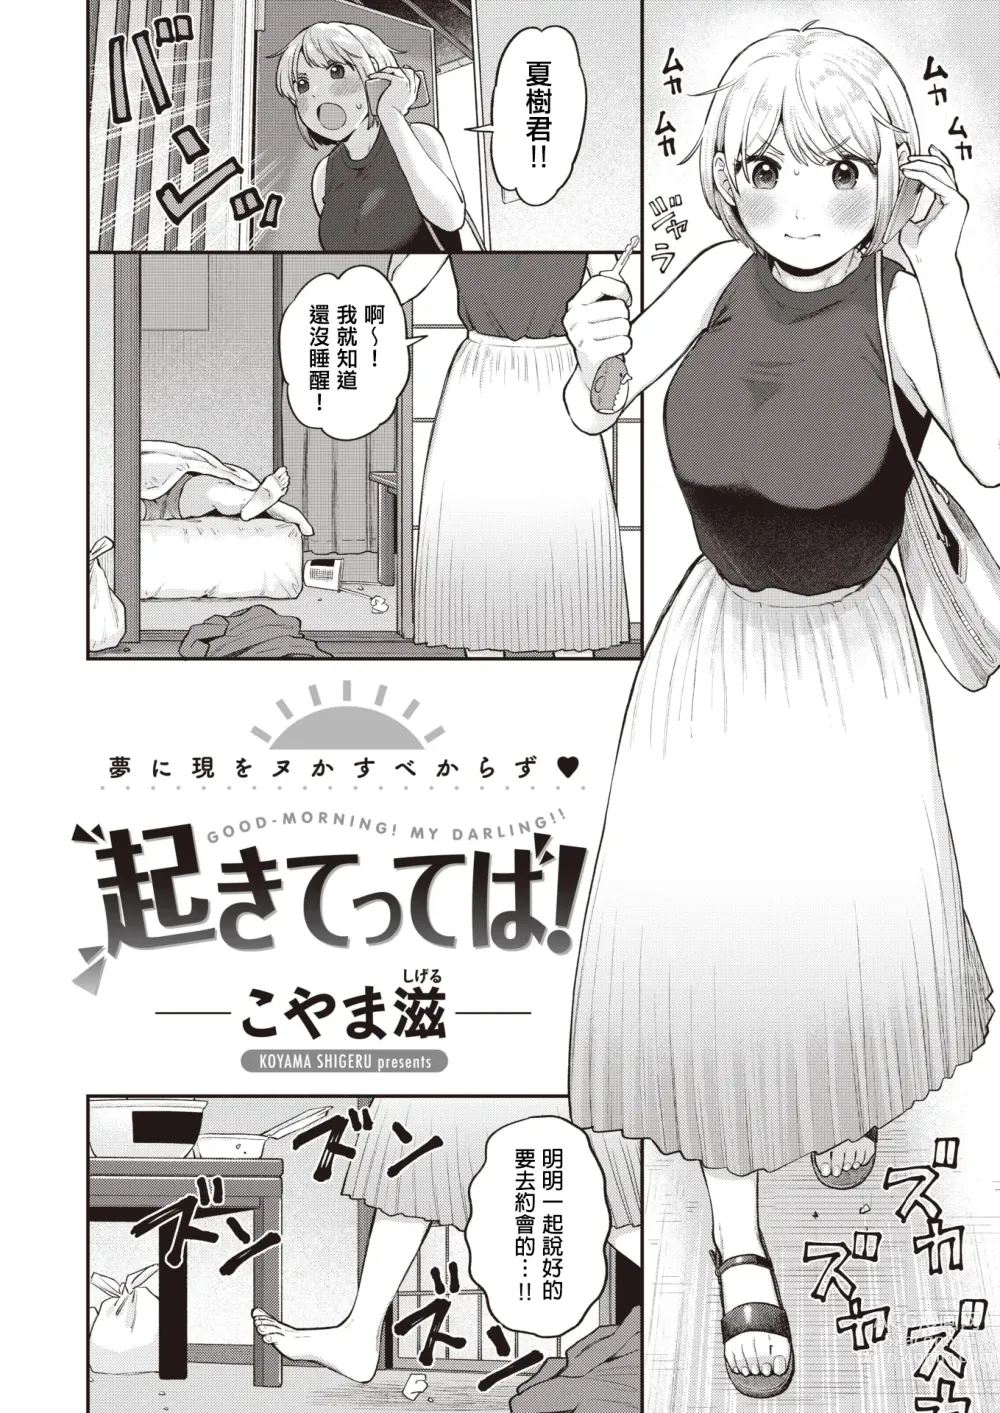 Page 2 of manga Okitetteba!